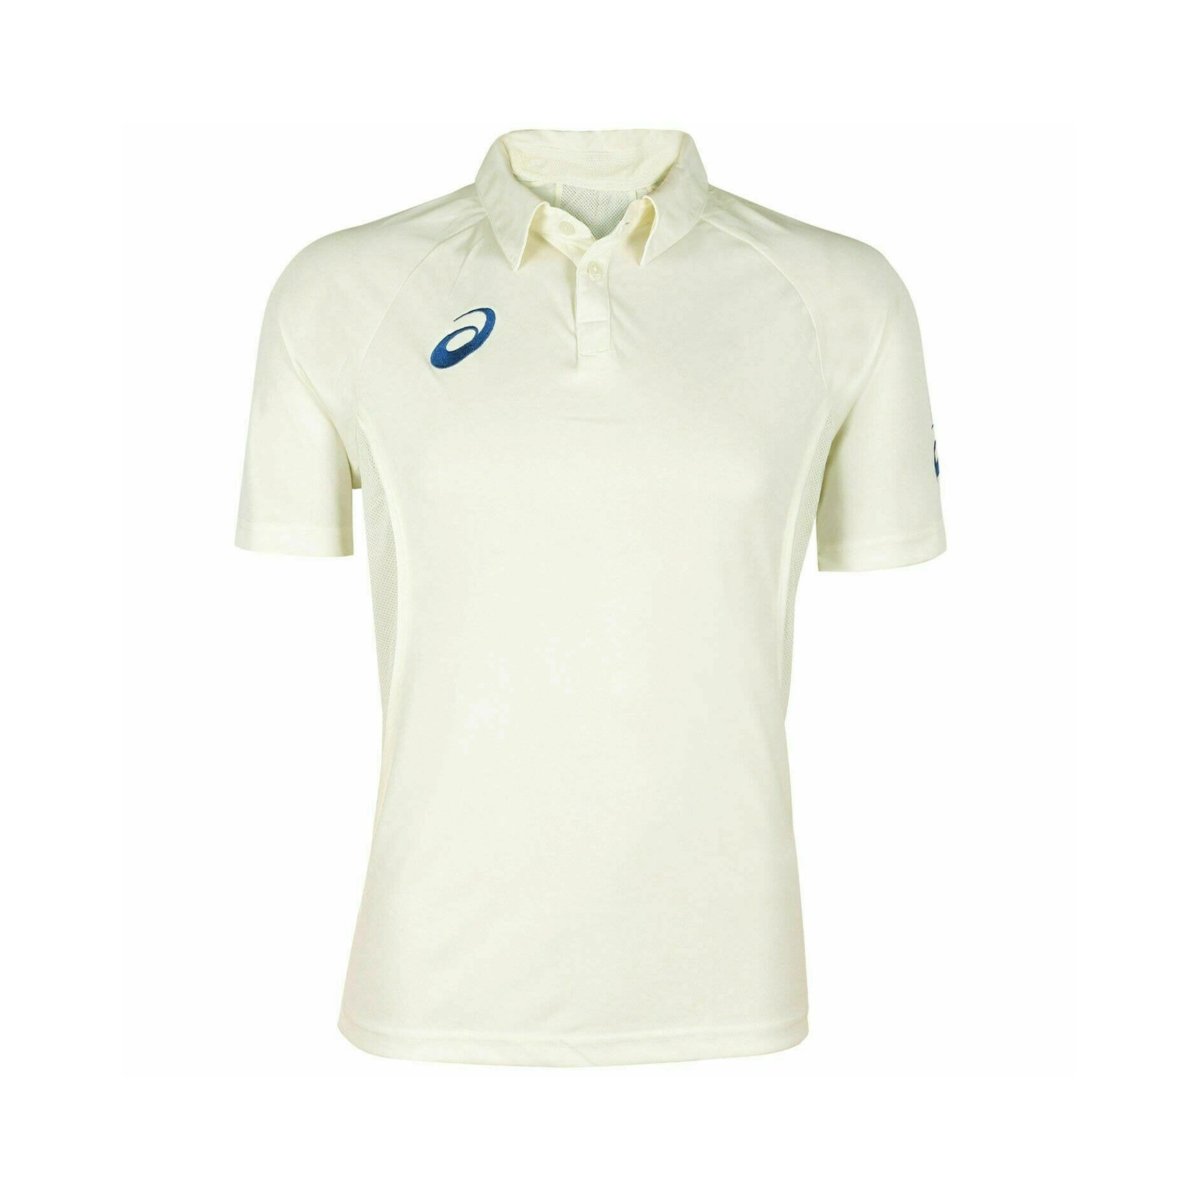 Asics Short Sleeves Cricket Shirt Cream.